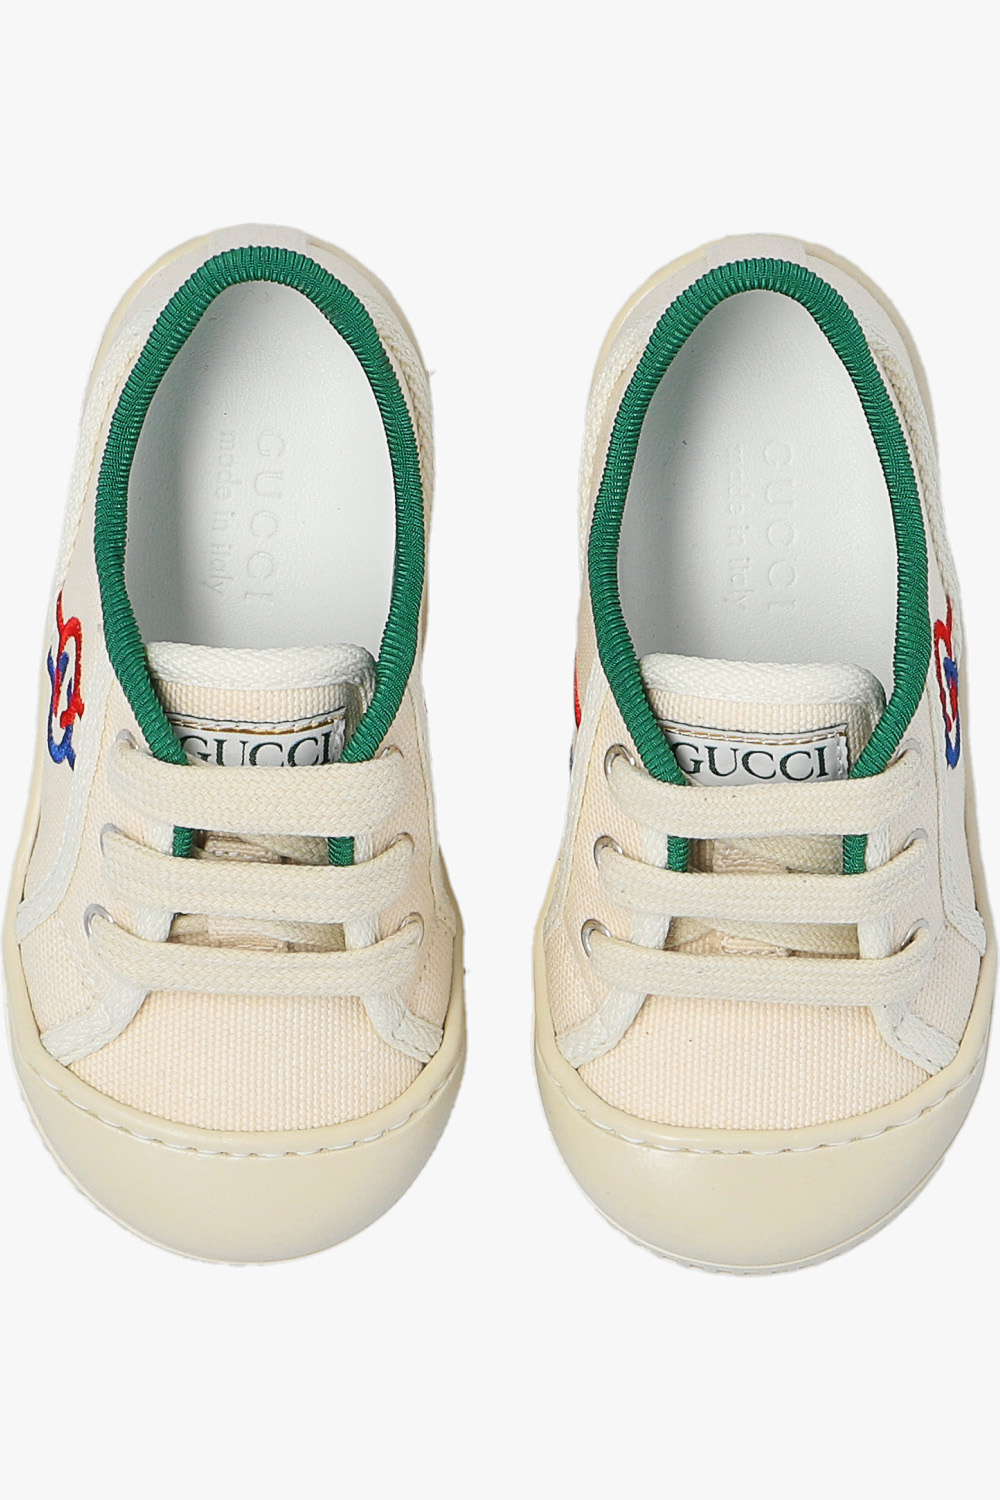 Gucci Kids ‘Tennis 1977’ boots